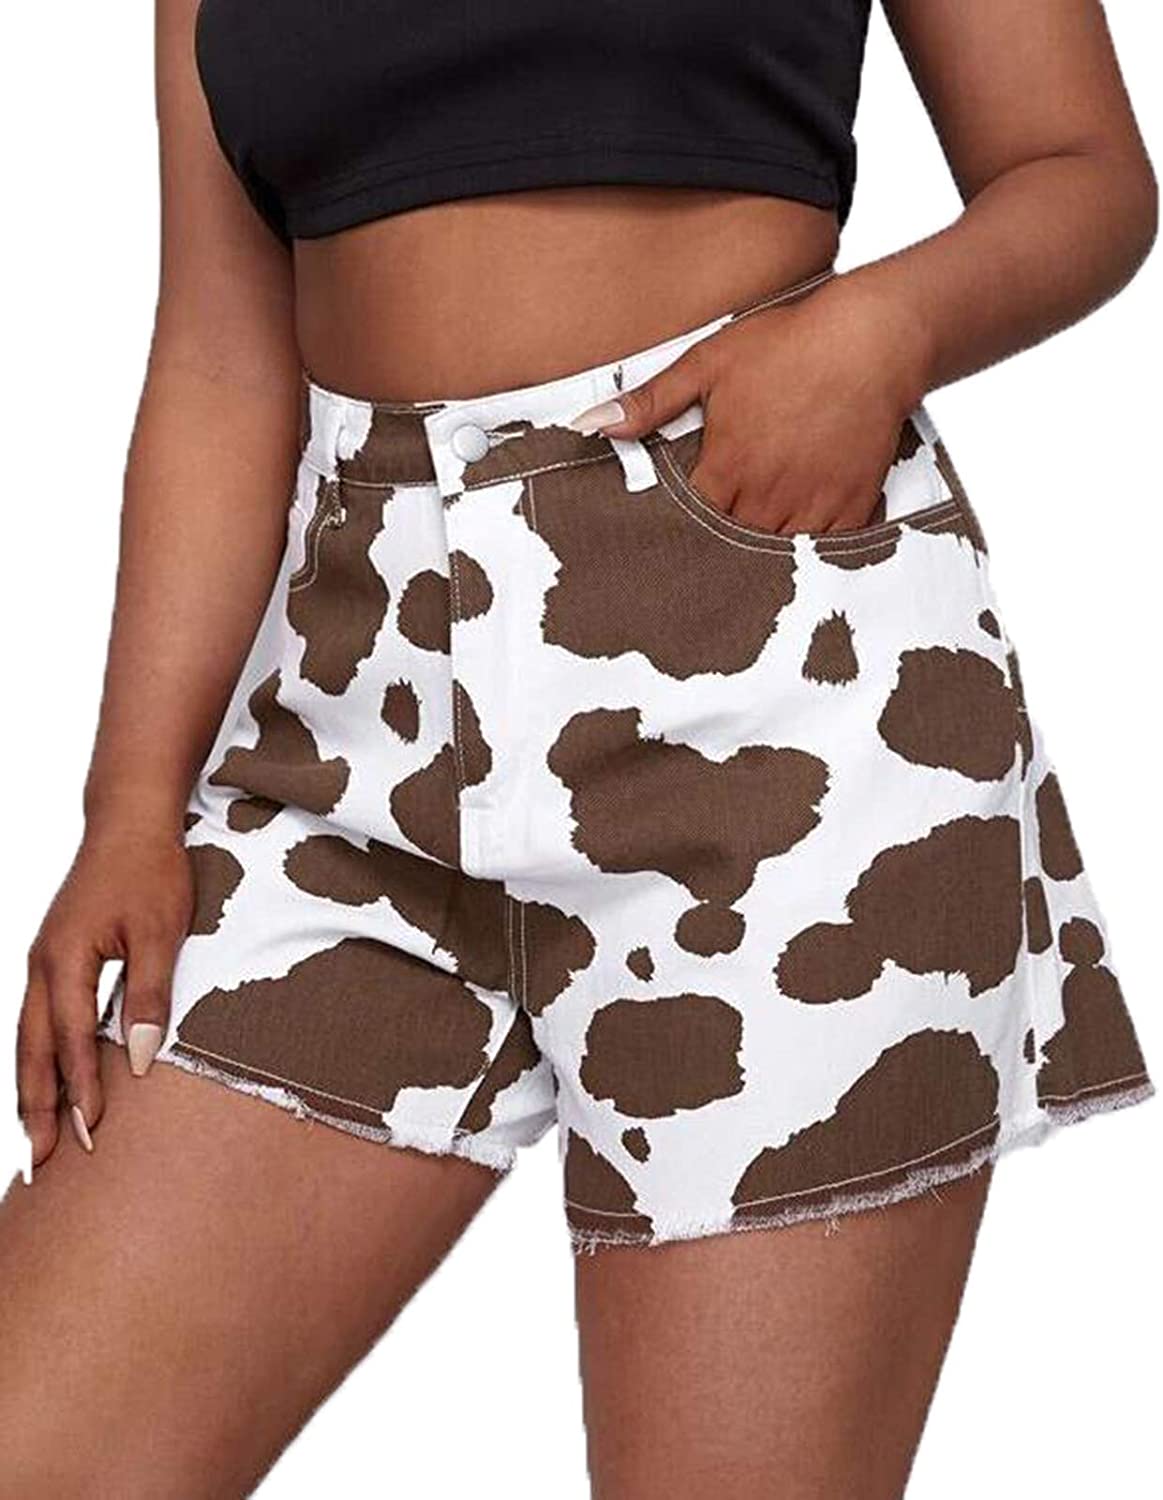 acsefire Women's Shorts Cow Pattern Prints Colorblock High waist denim shorts